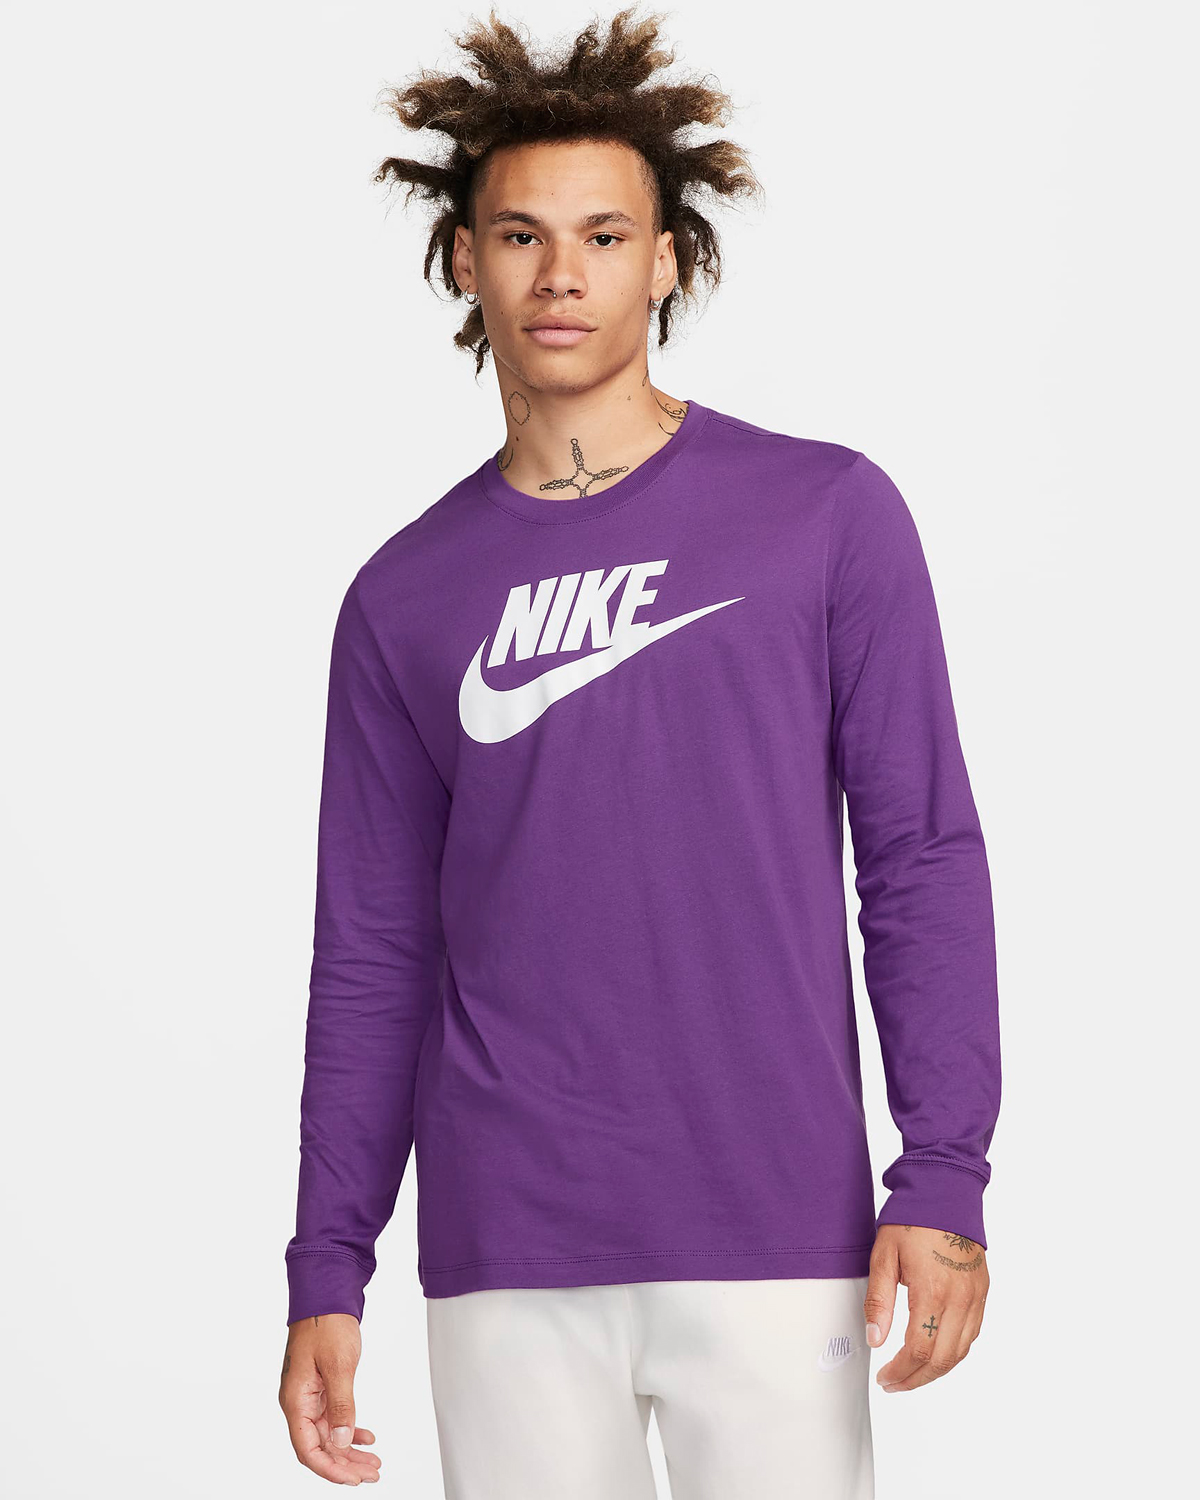 Nike-Sportswear-Long-Sleeve-T-Shirt-Purple-Cosmos